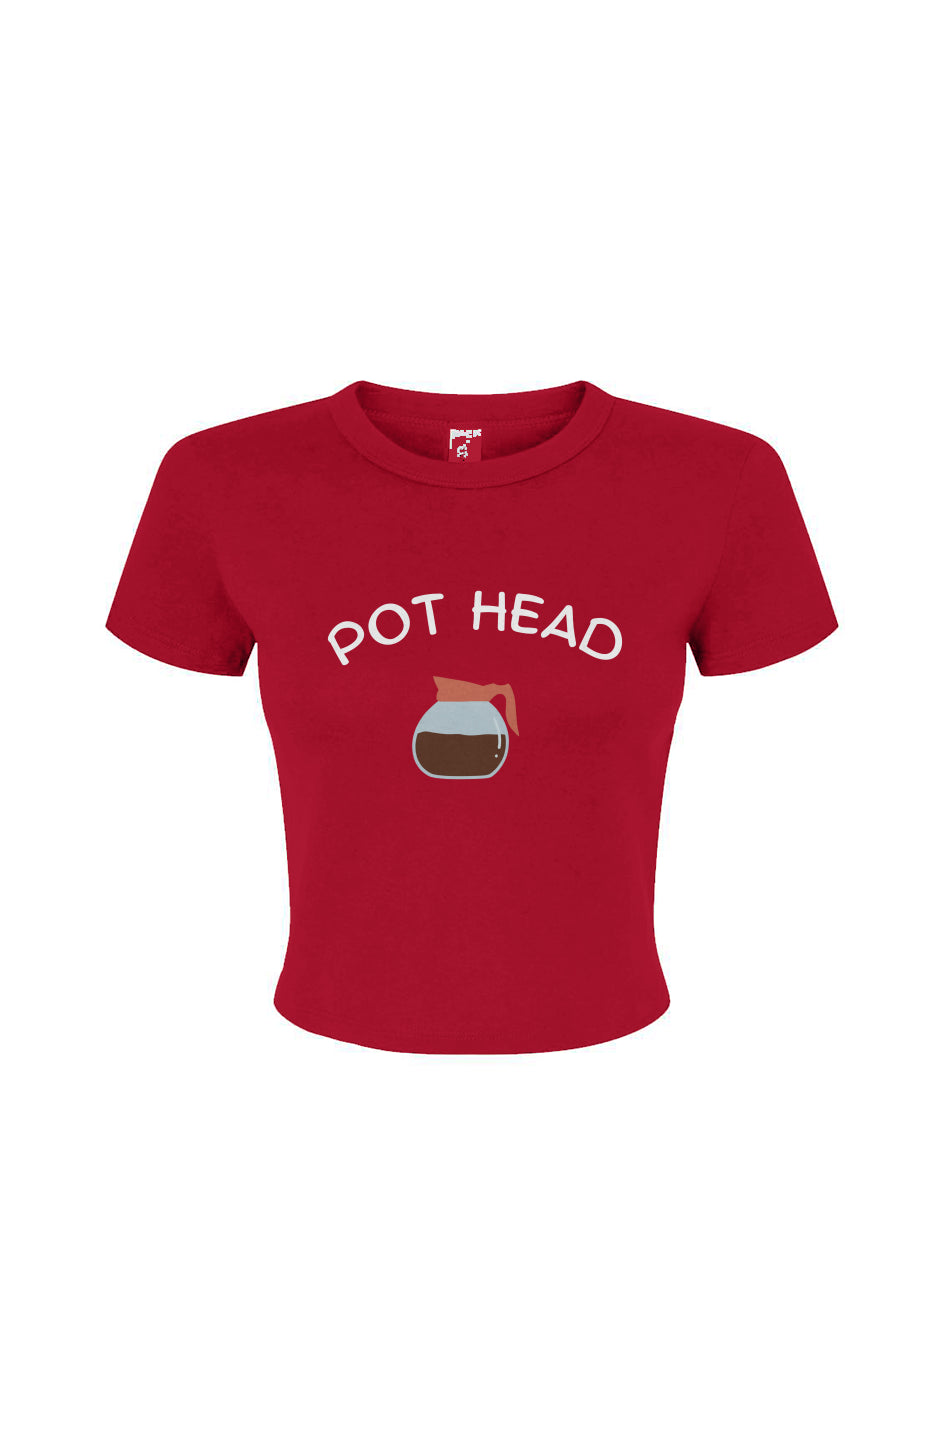 "Pot Head" - Baby tee